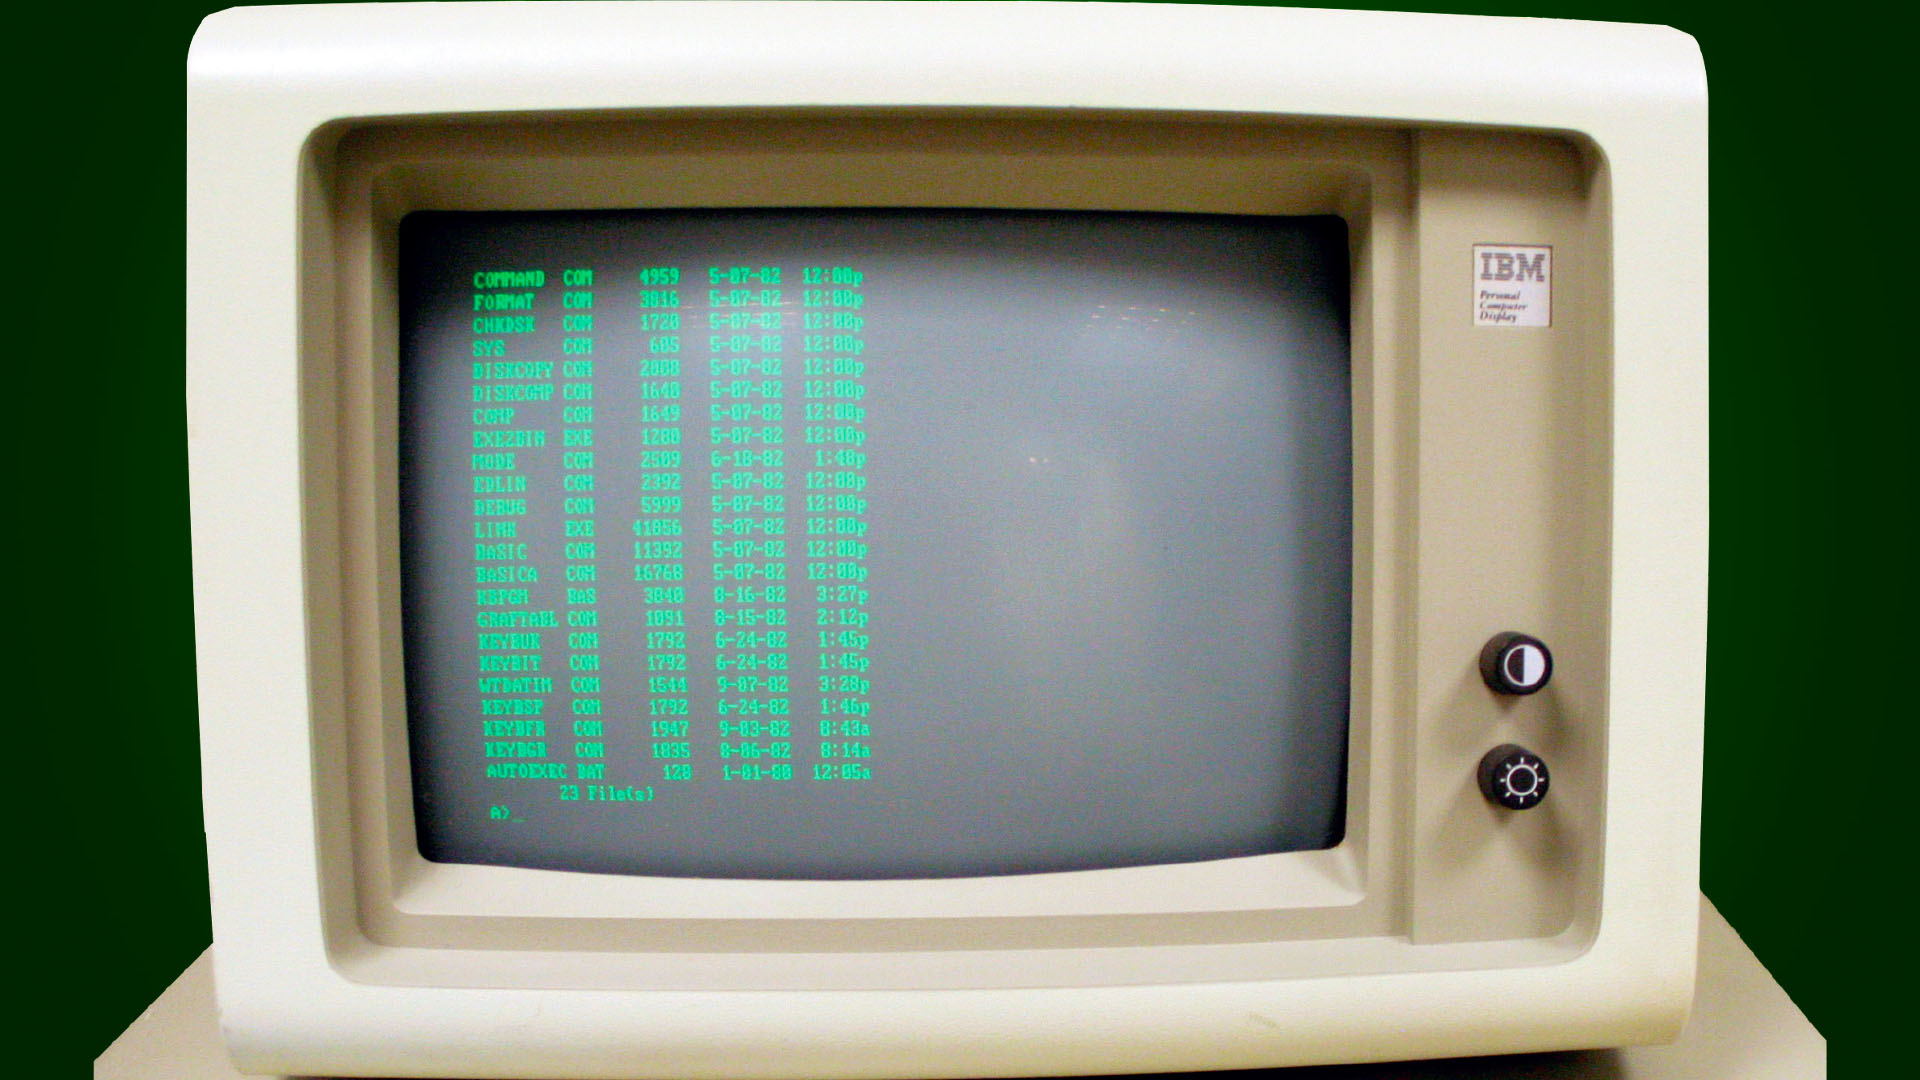 IBM PC 5150 running DOS 1.0